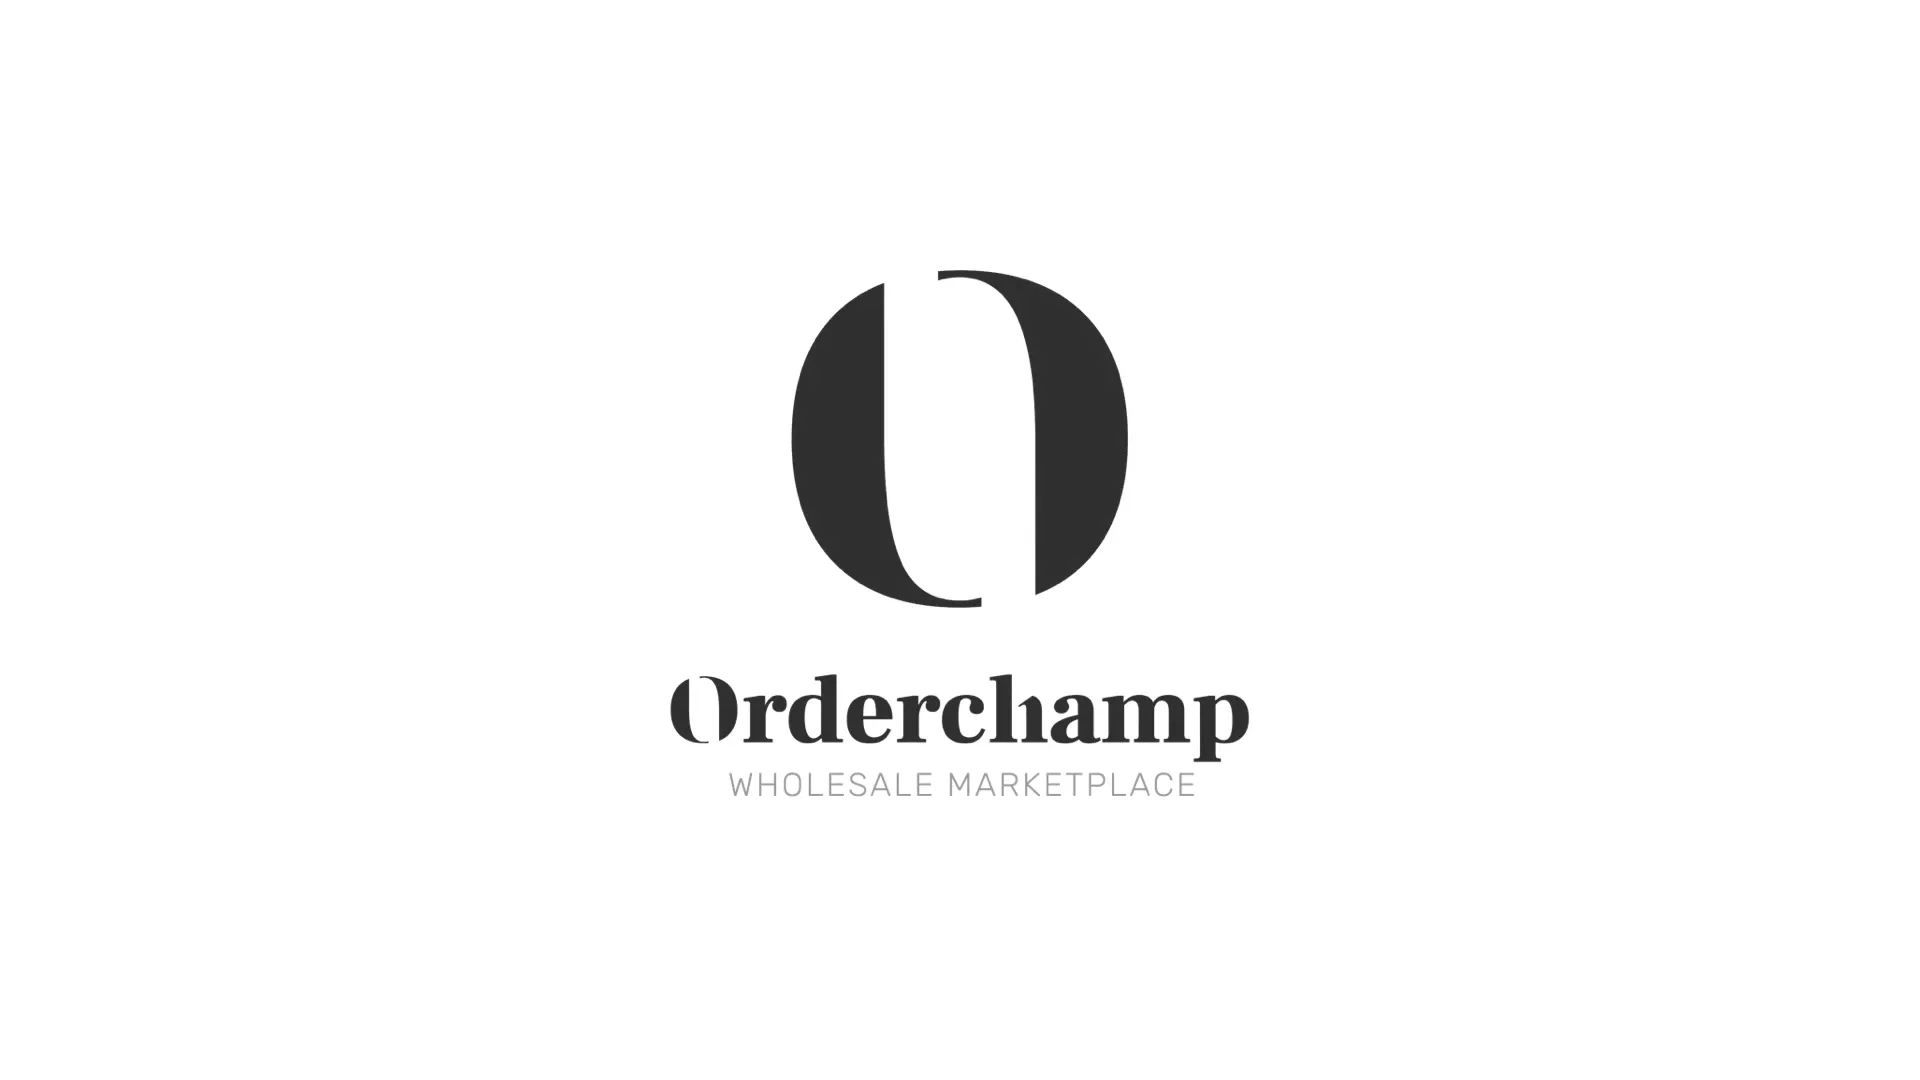 Orderchamp